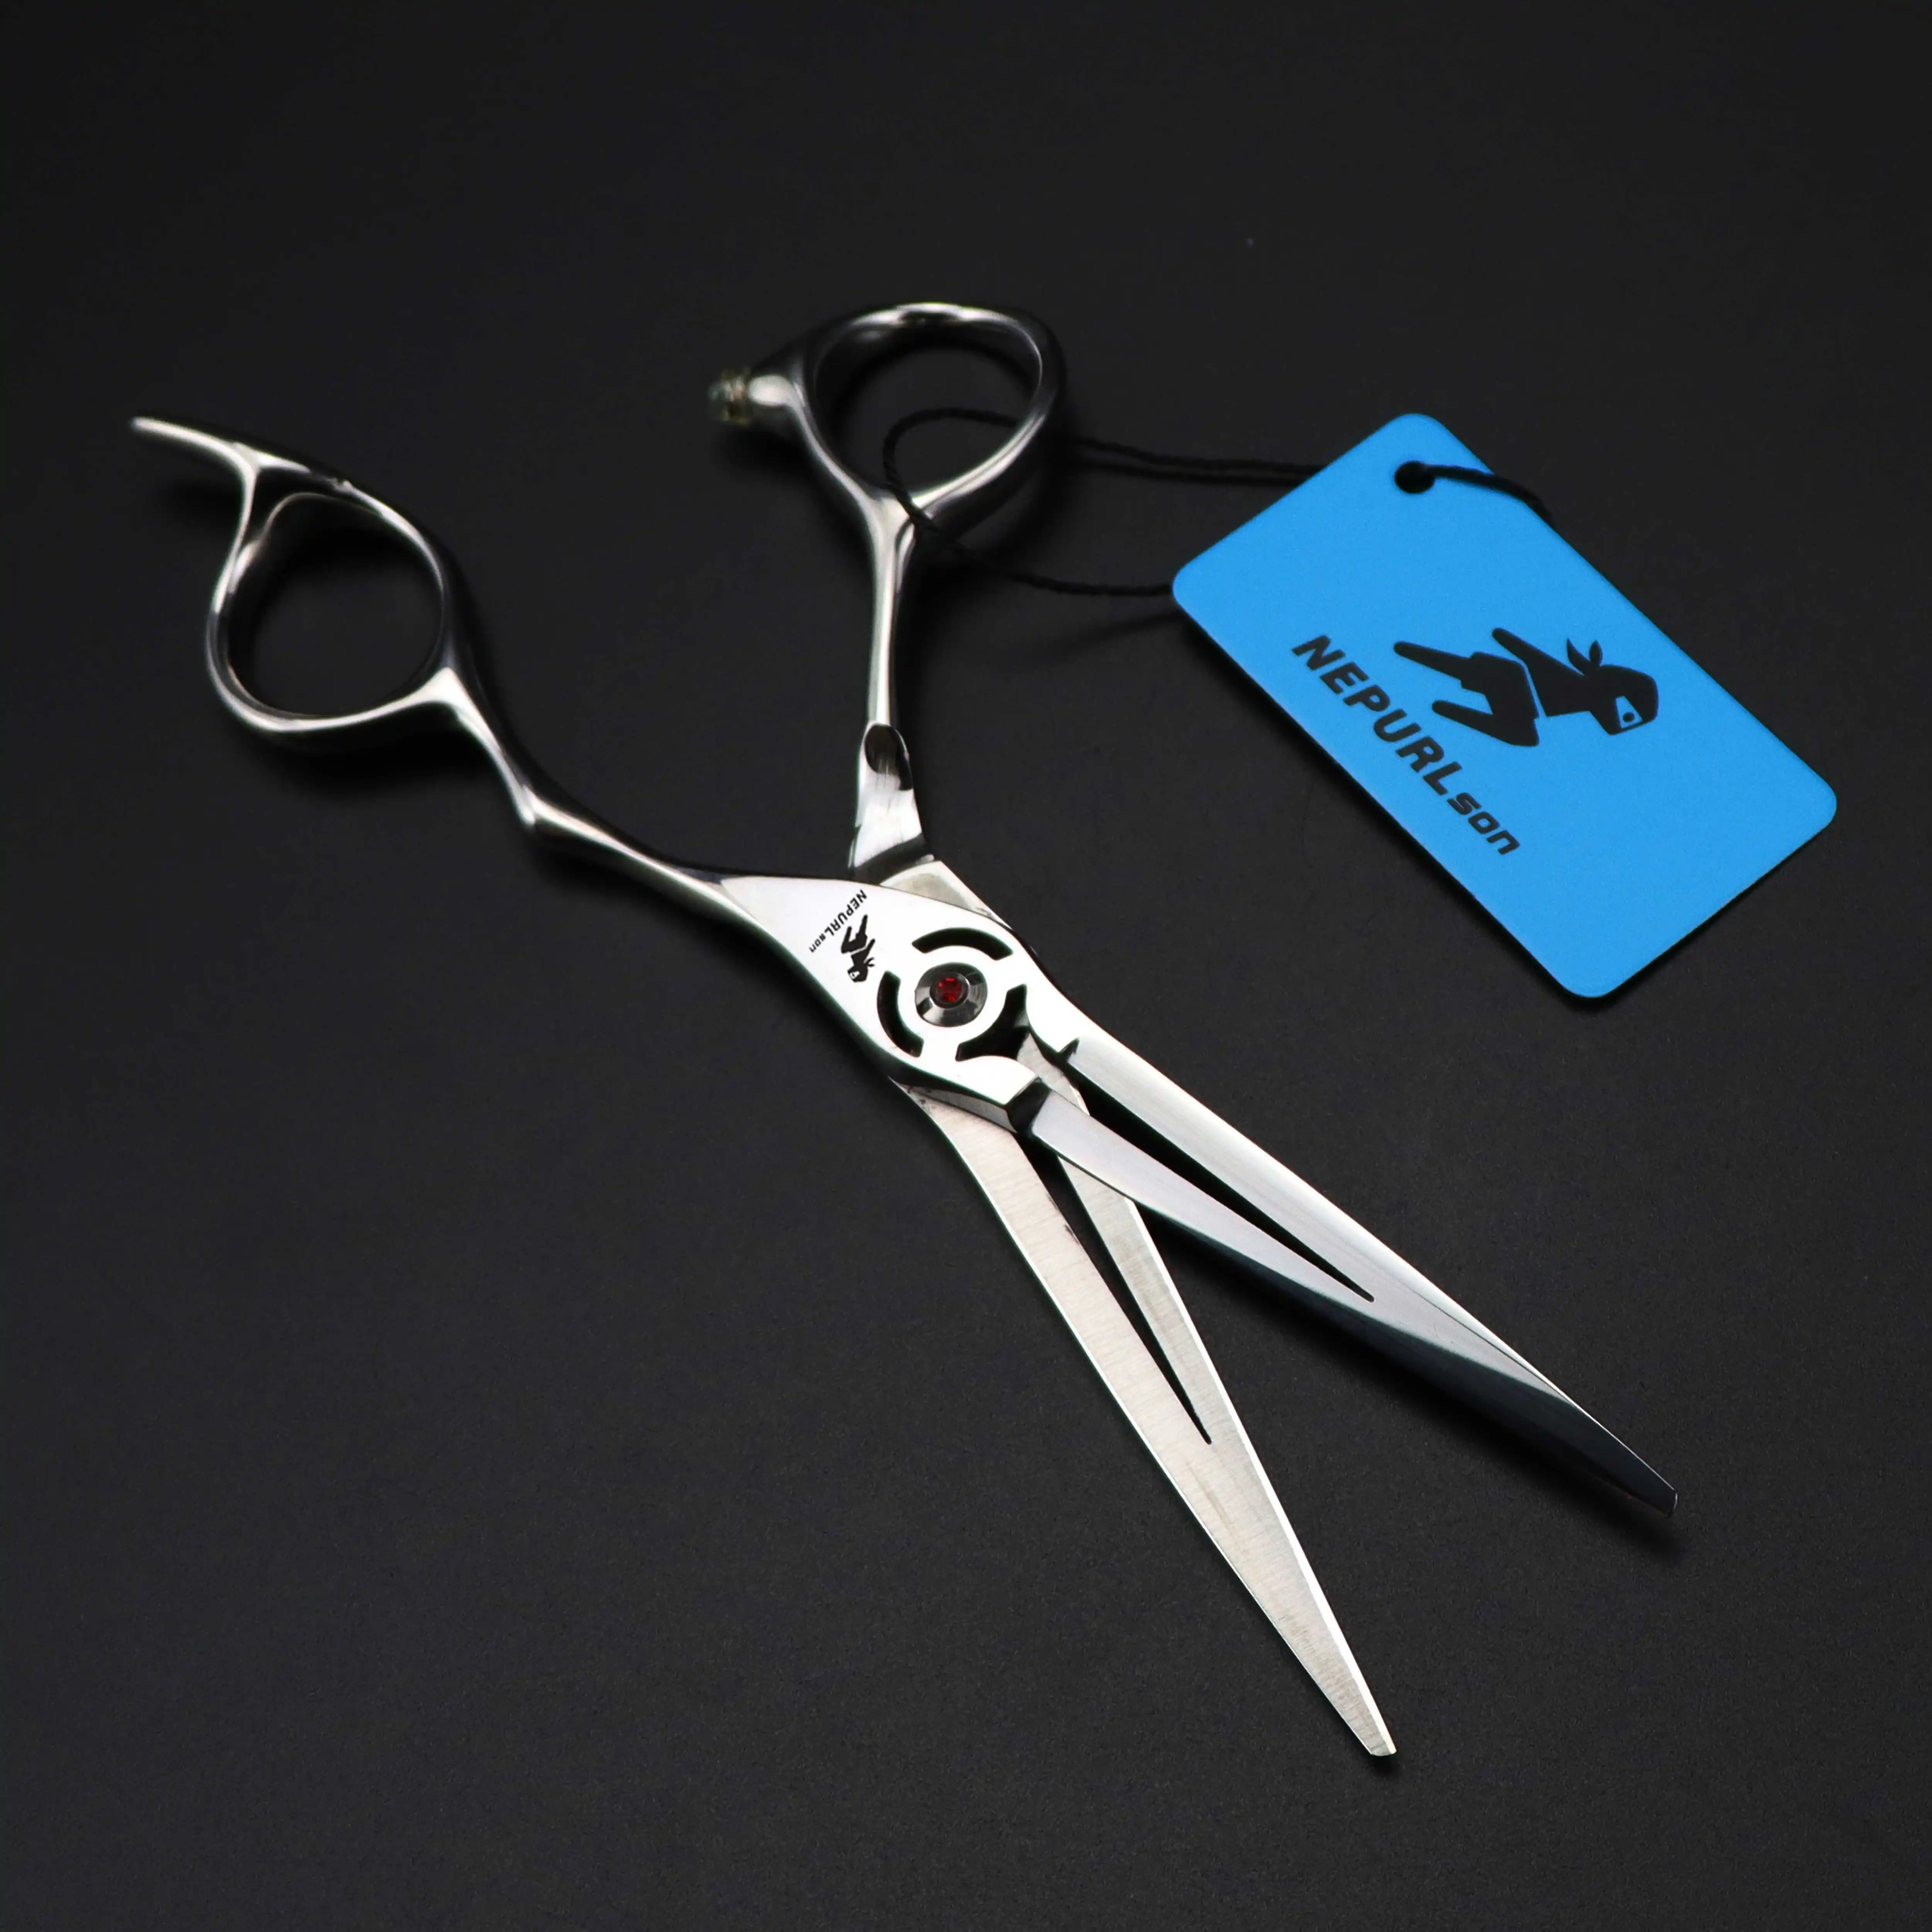 6.0 inch GMB-01 new fashion design Baby scissors beauty barber scissors flat scissors